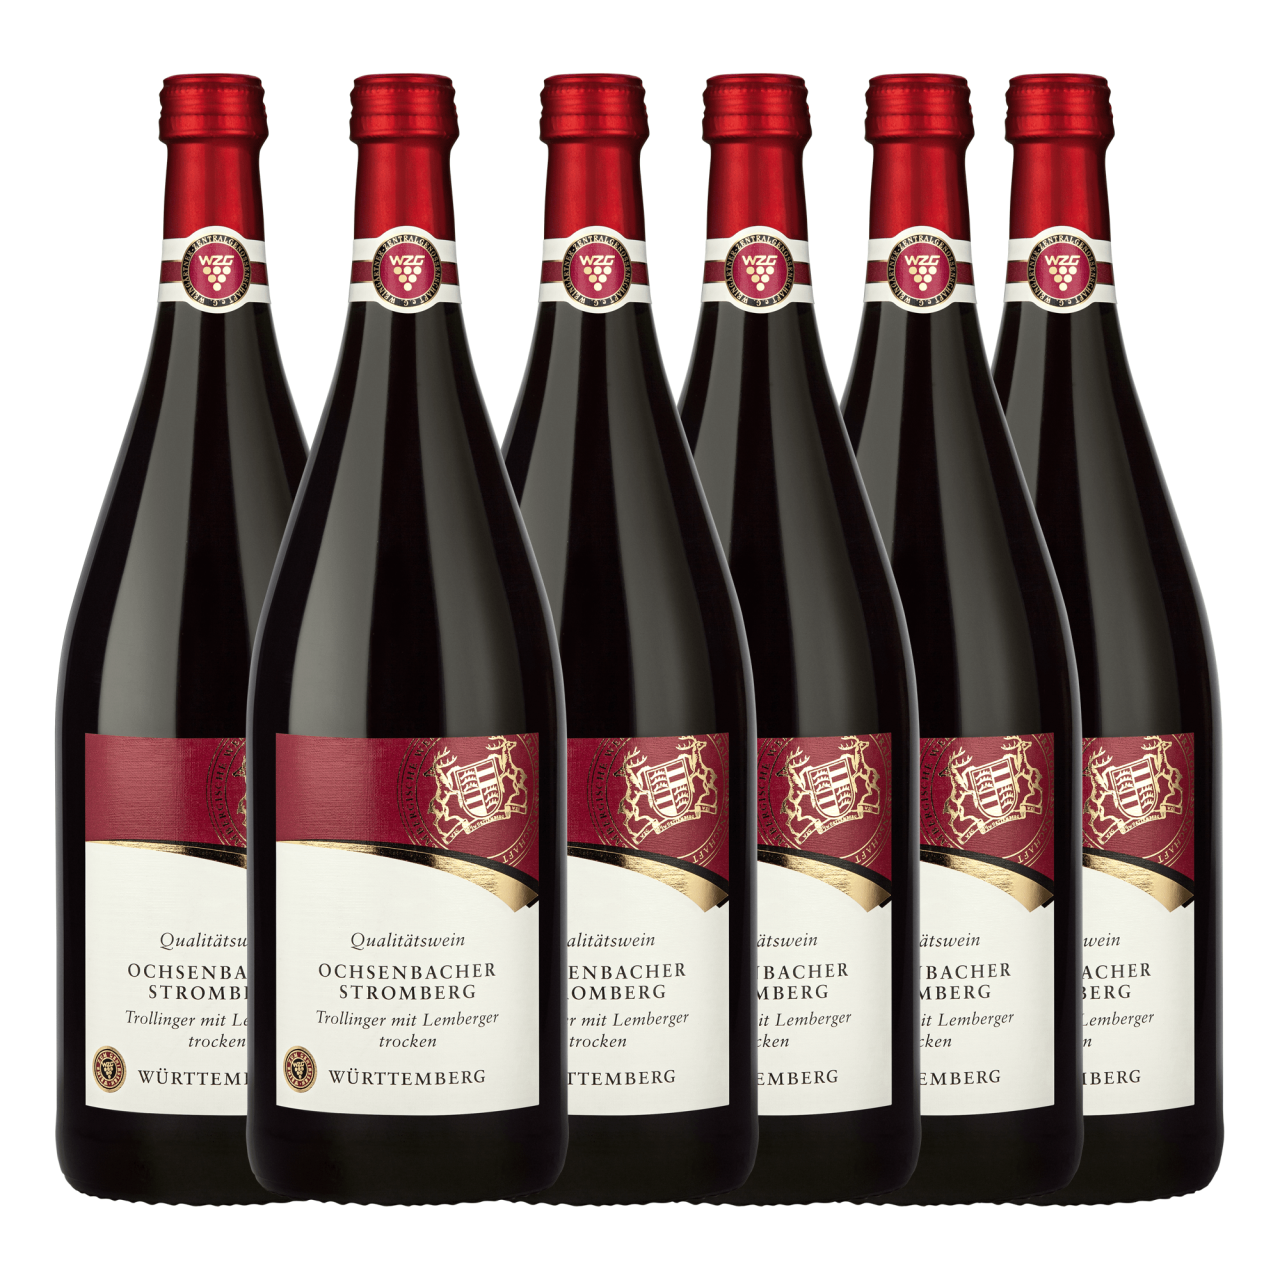 Ochsenbacher Stromberg Trollinger mit Lemberger Qualitätswein trocken6er Karton